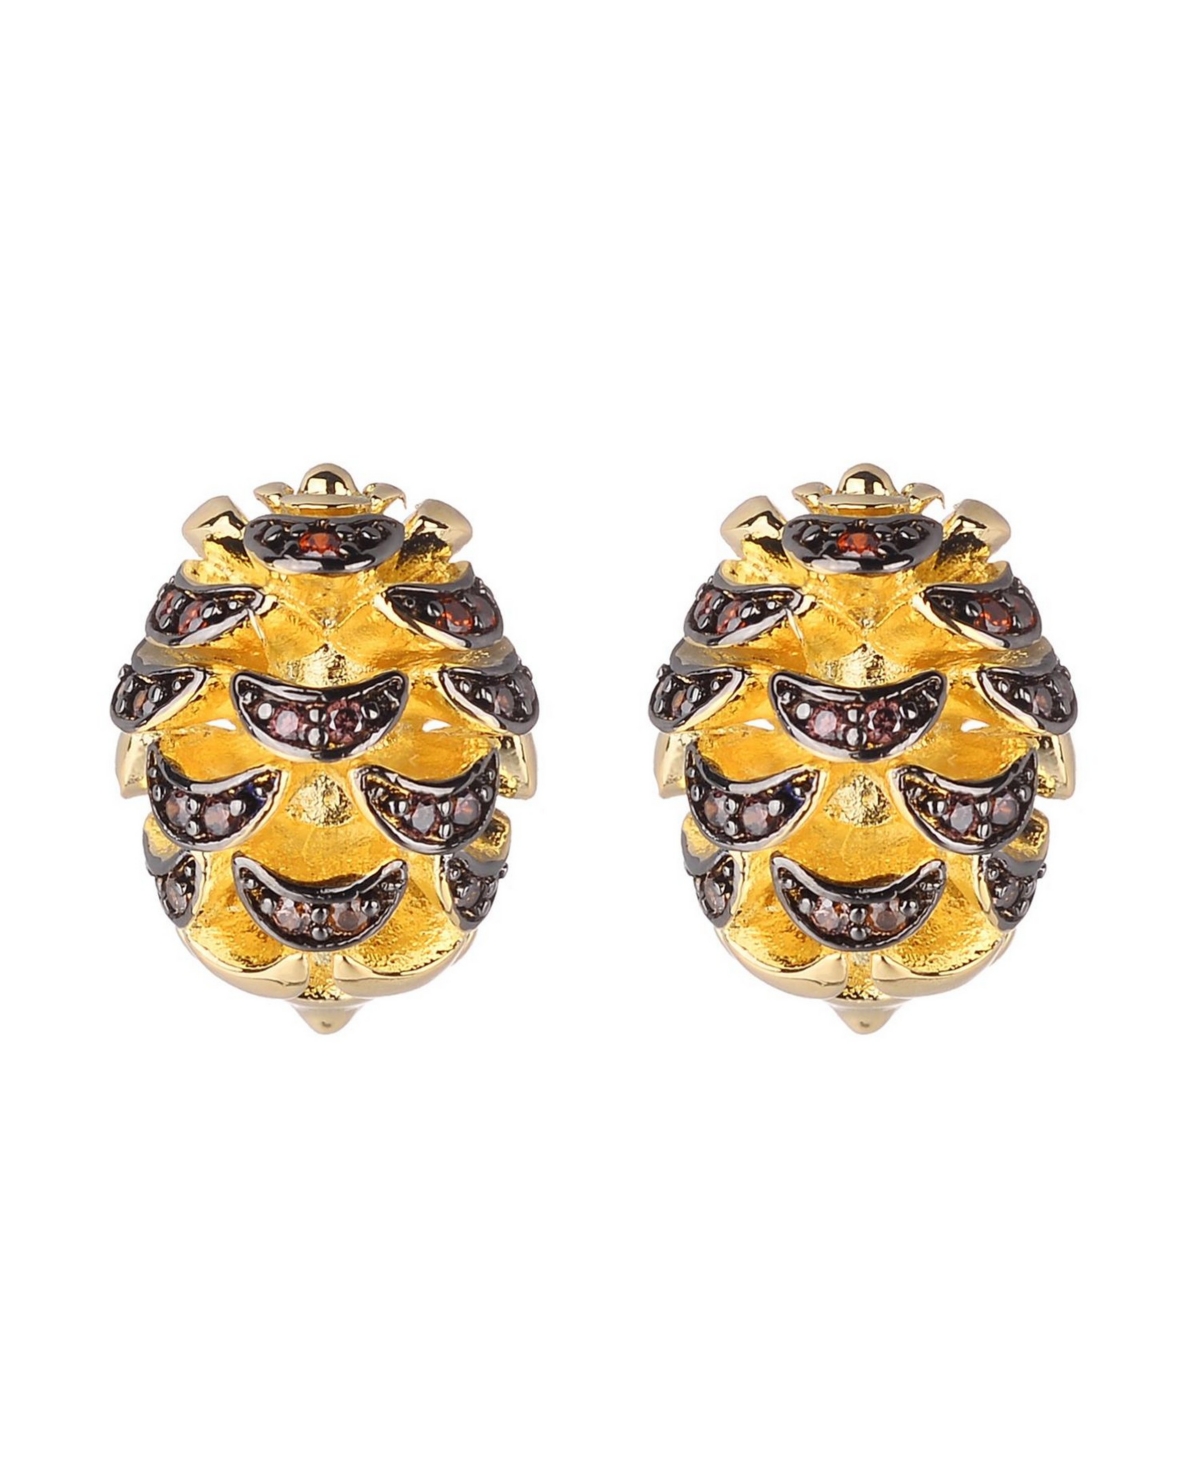 Acorn Stud Earring With Cubic Zirconia Stones - Gold